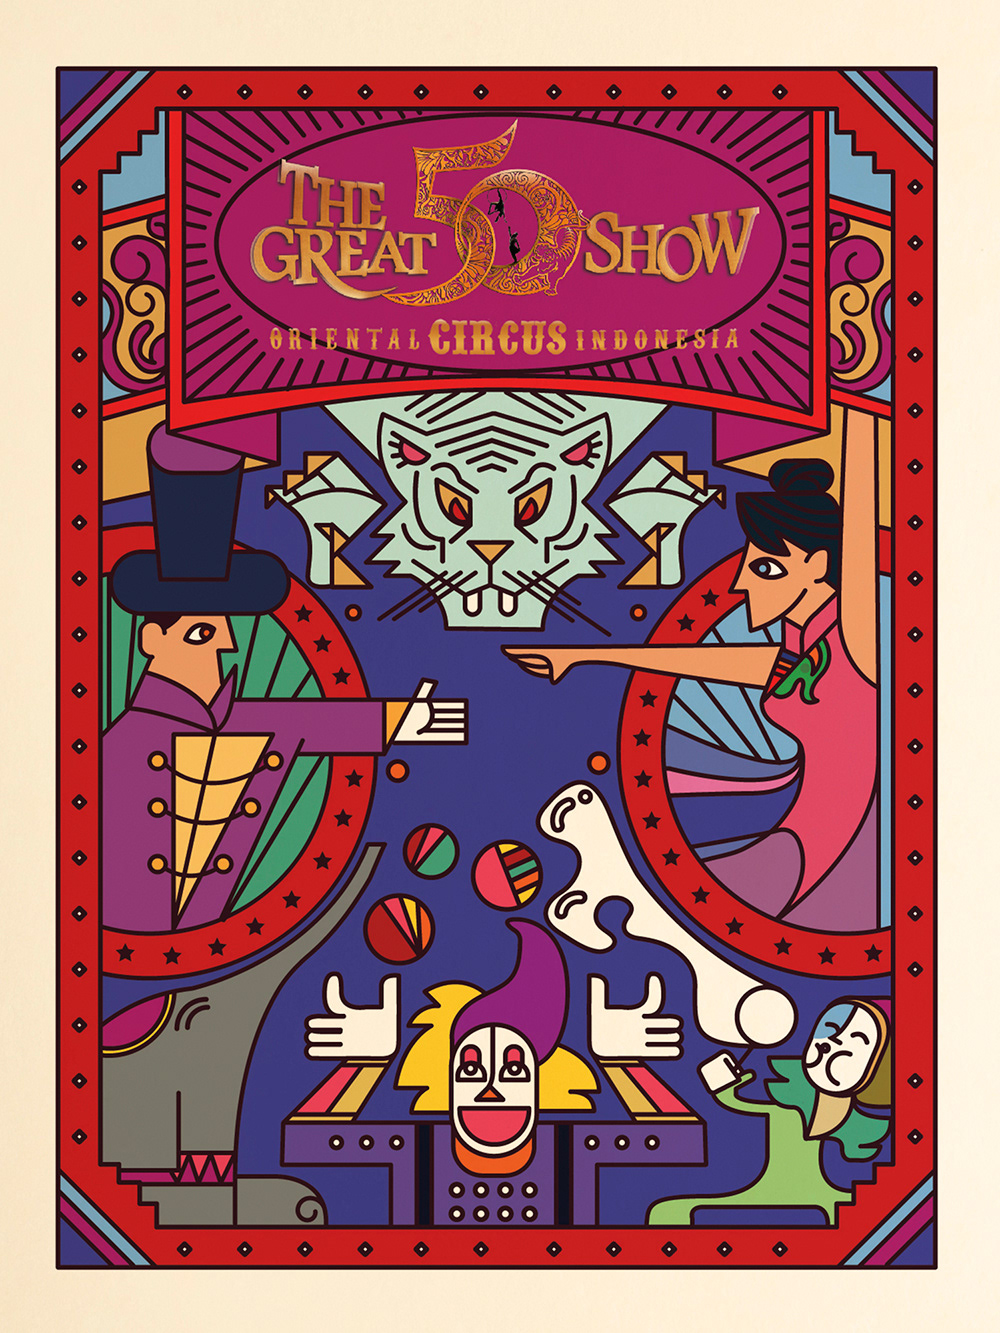 thegreat50show the great 50 Circus Design circus branding circus merchandise line art branding circus id circus graphics jaemyc circus collateral